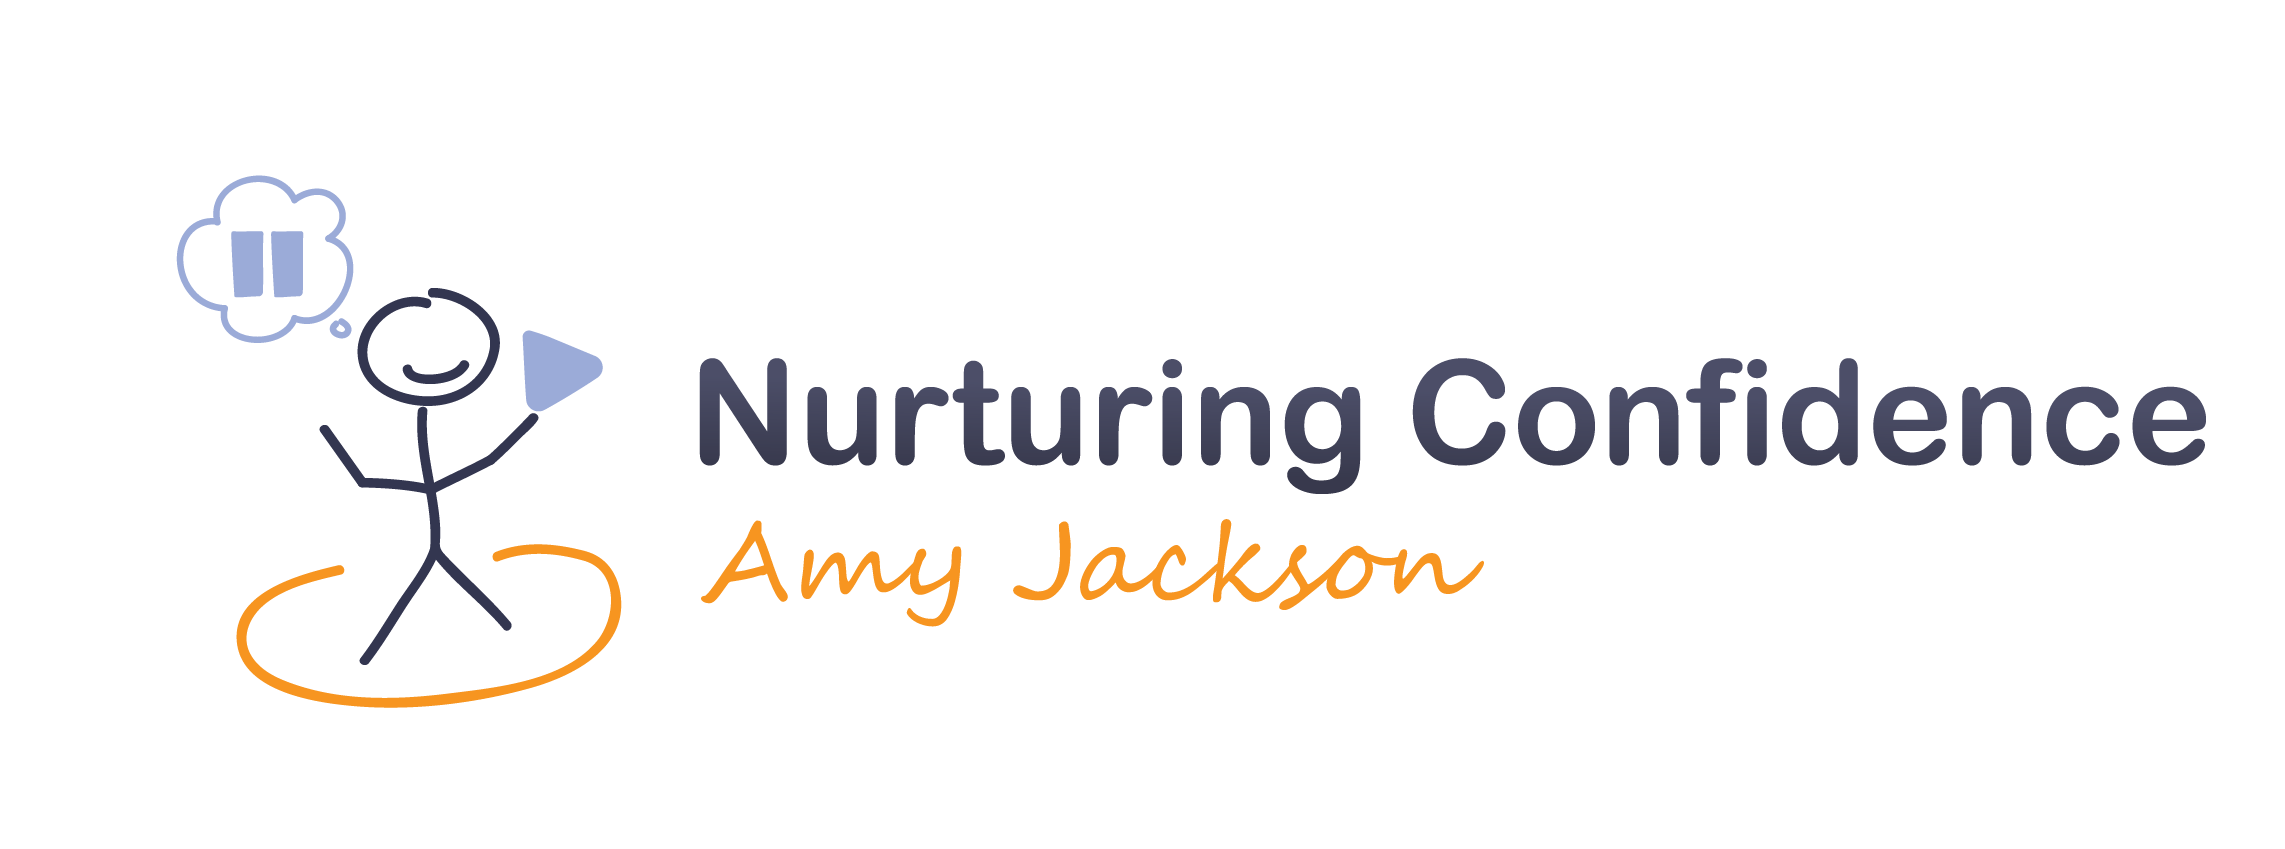 amy jackson logo